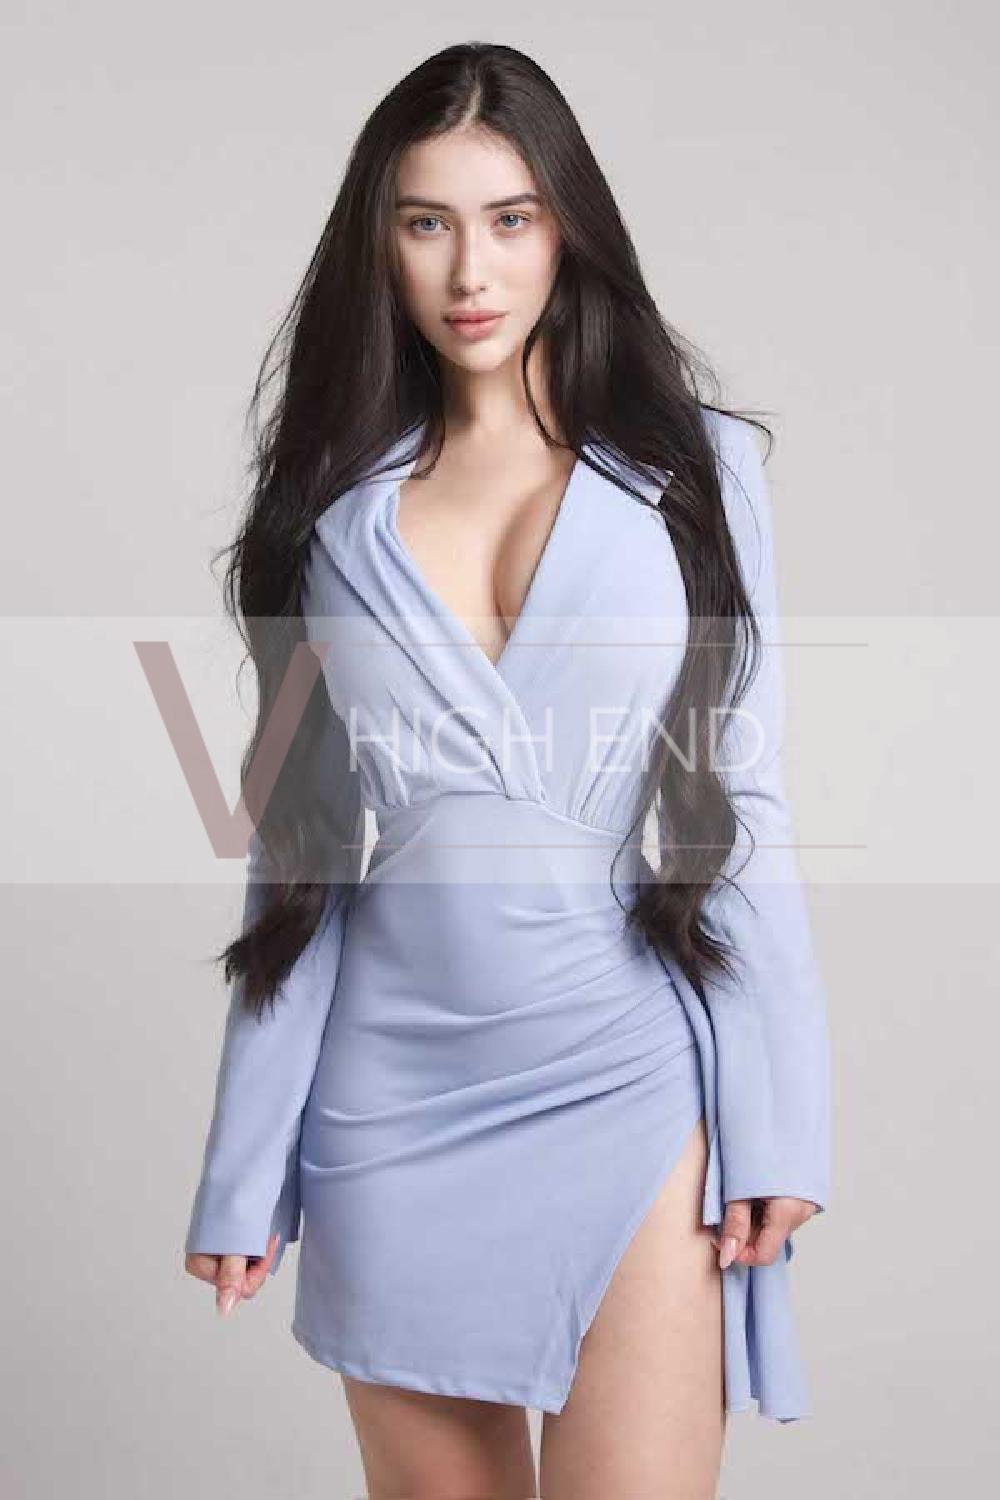 Sensual brunette woman Paulina is wearing blue body tight dress 